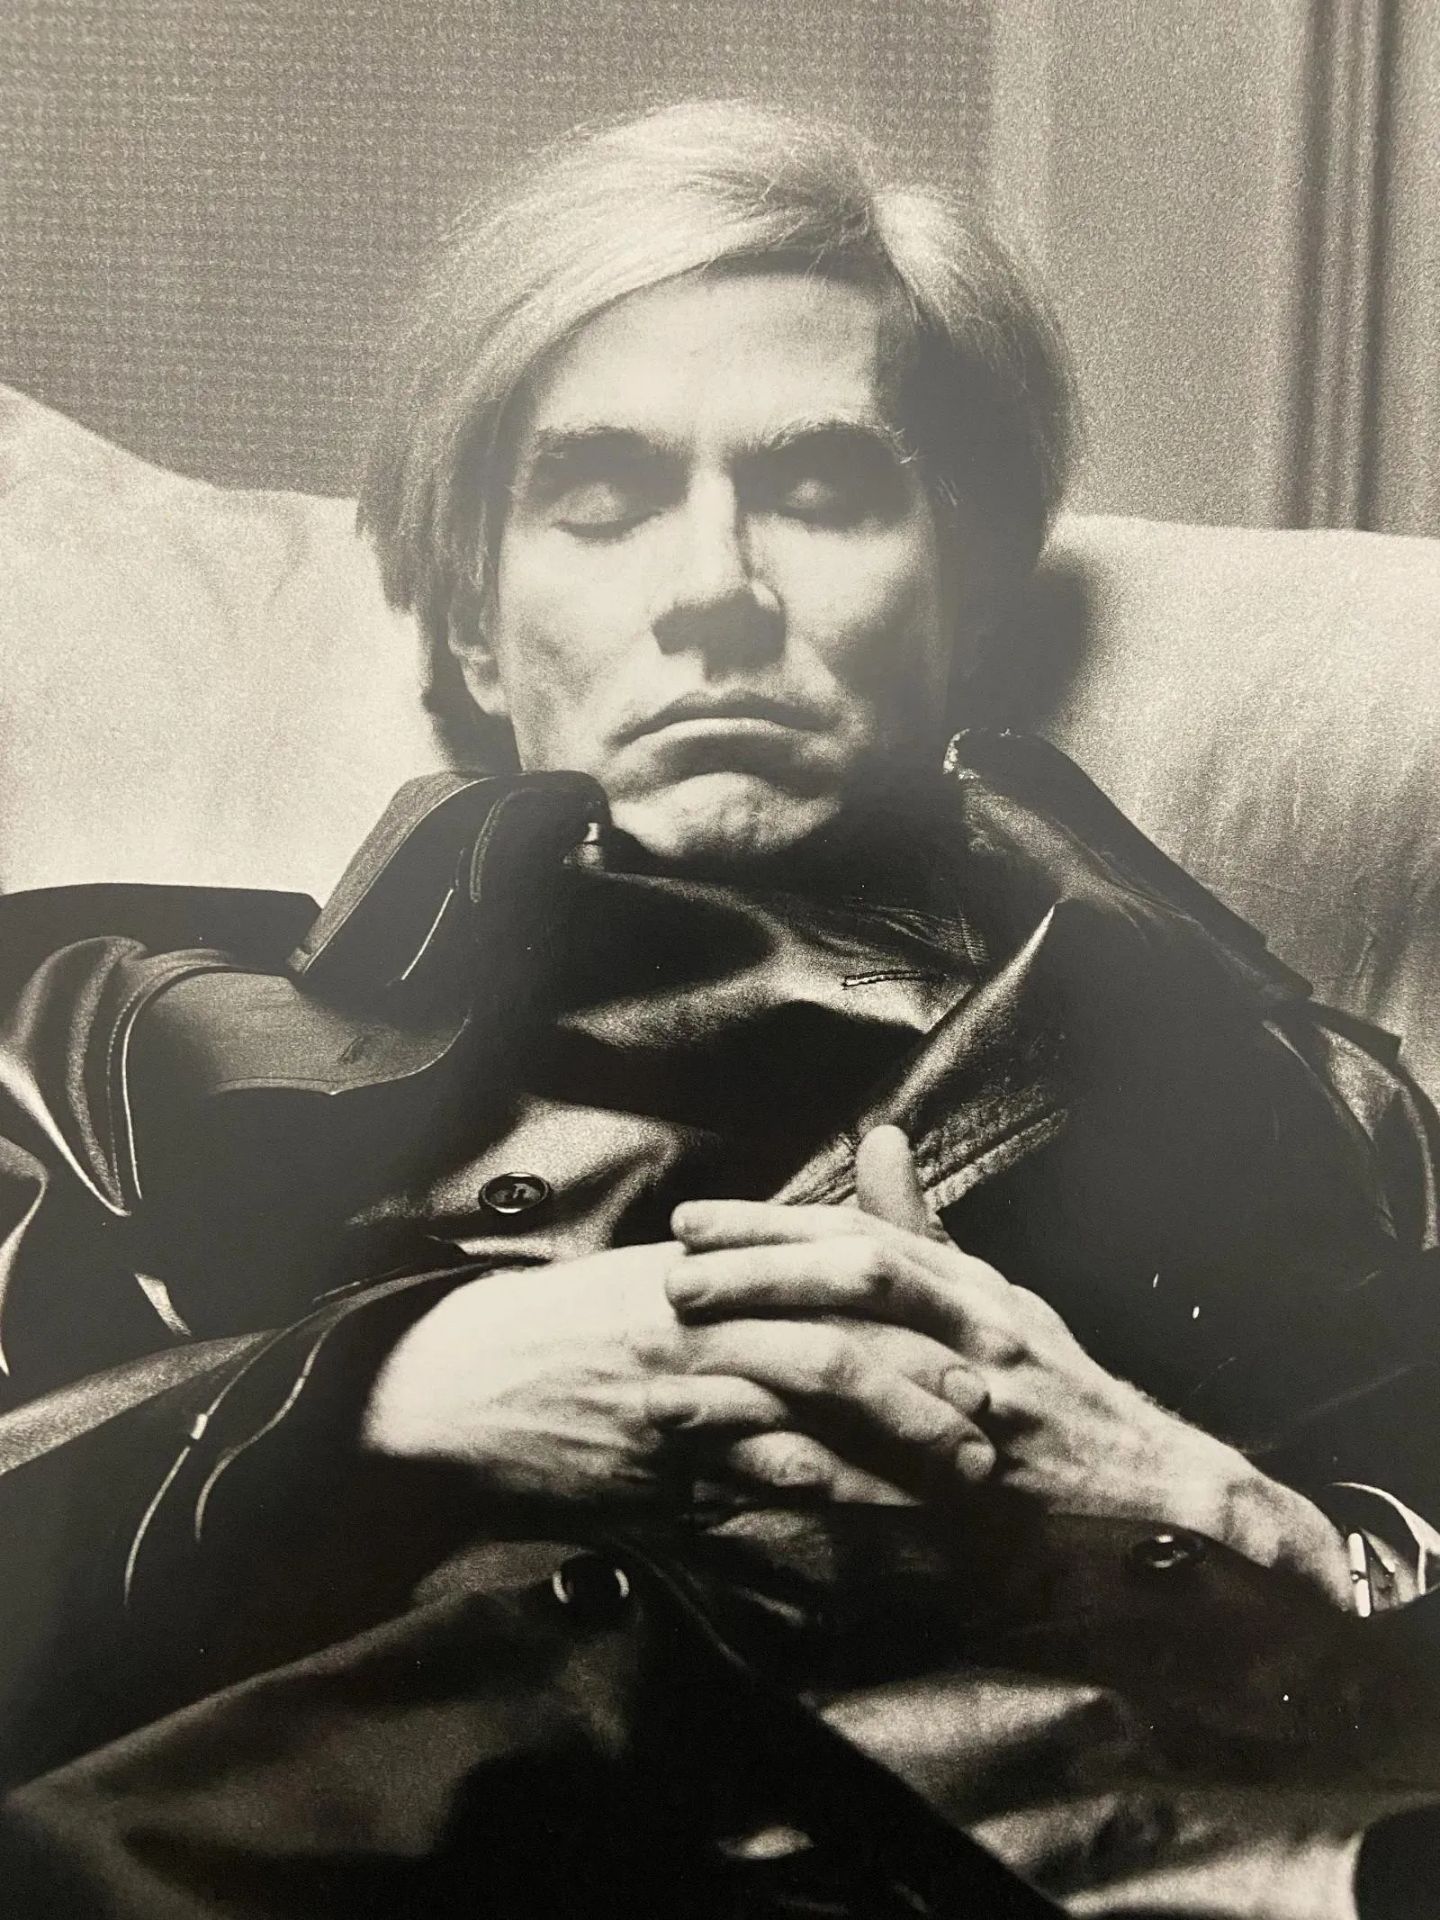 Helmut Newton "Andy Warhol, Vogue Uoma, Paris 1974" Print